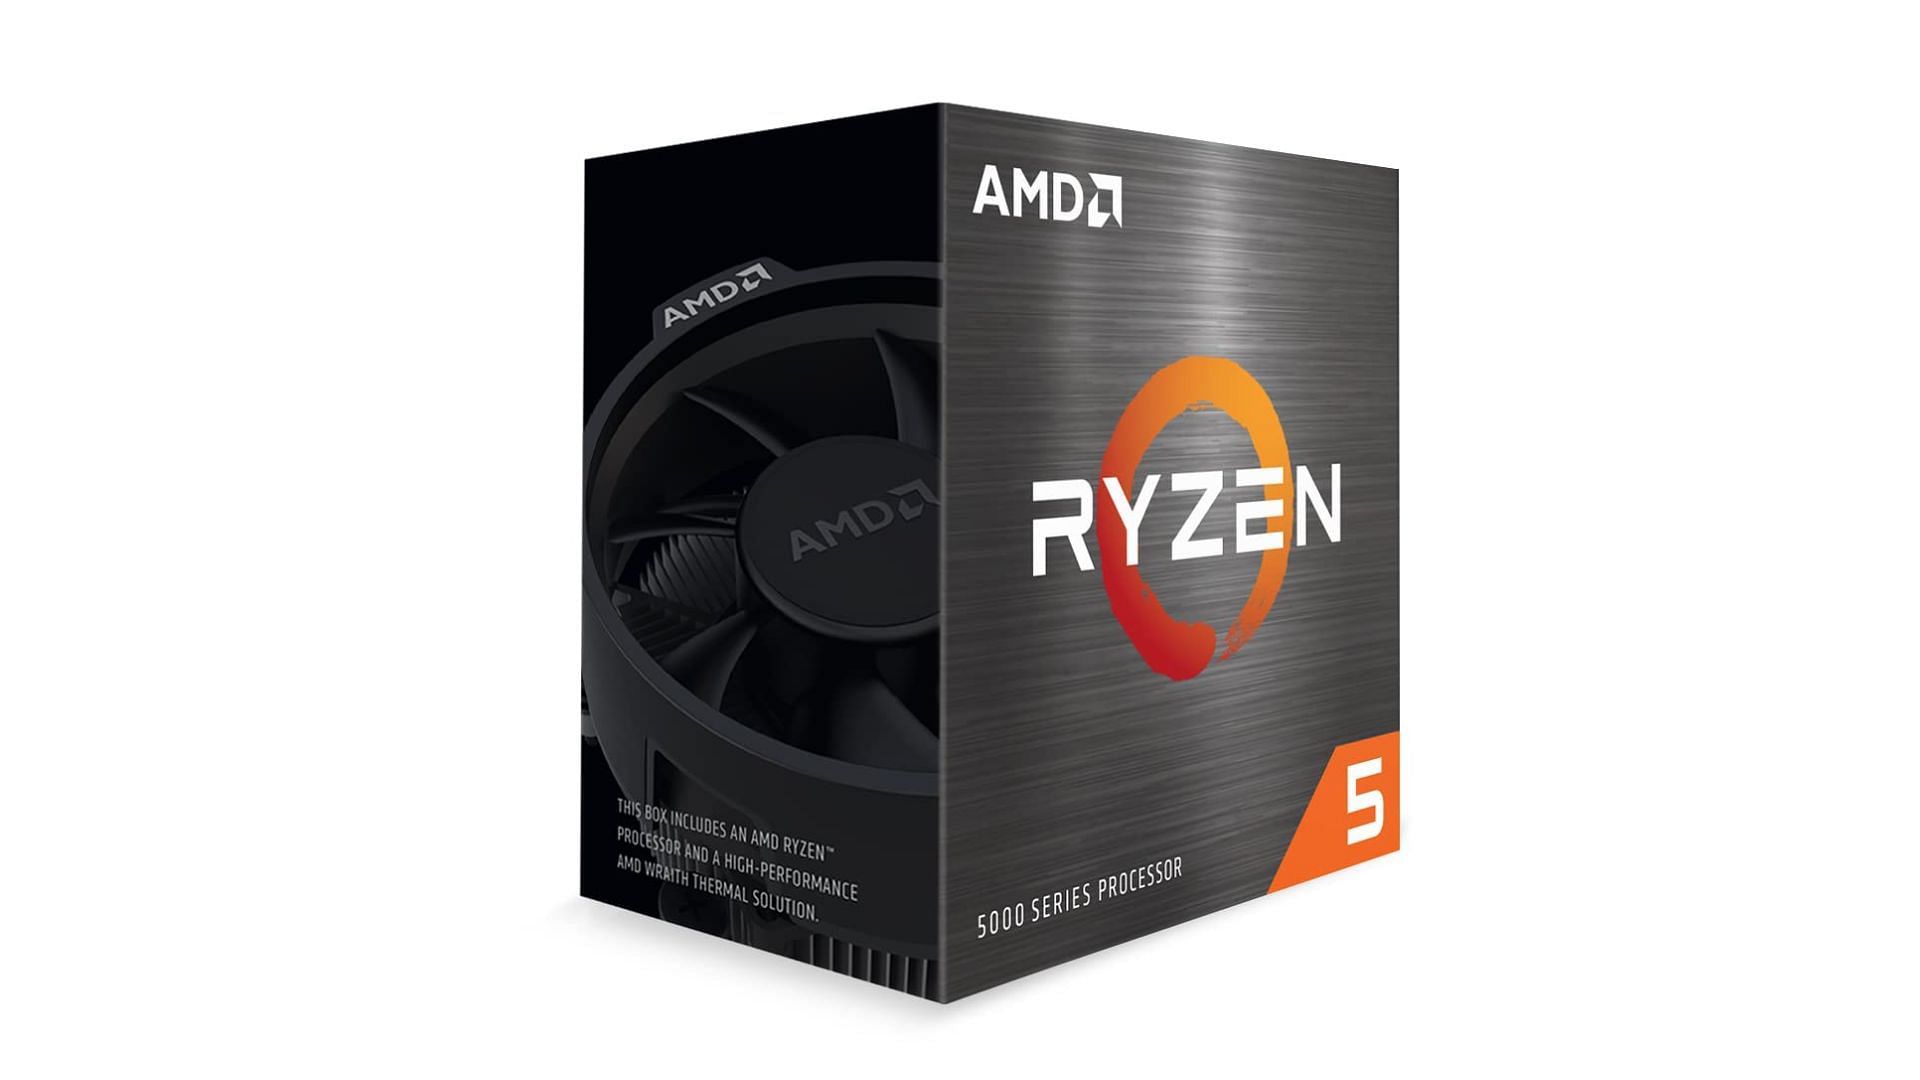 The Ryzen 5 5600 (Image via AMD)